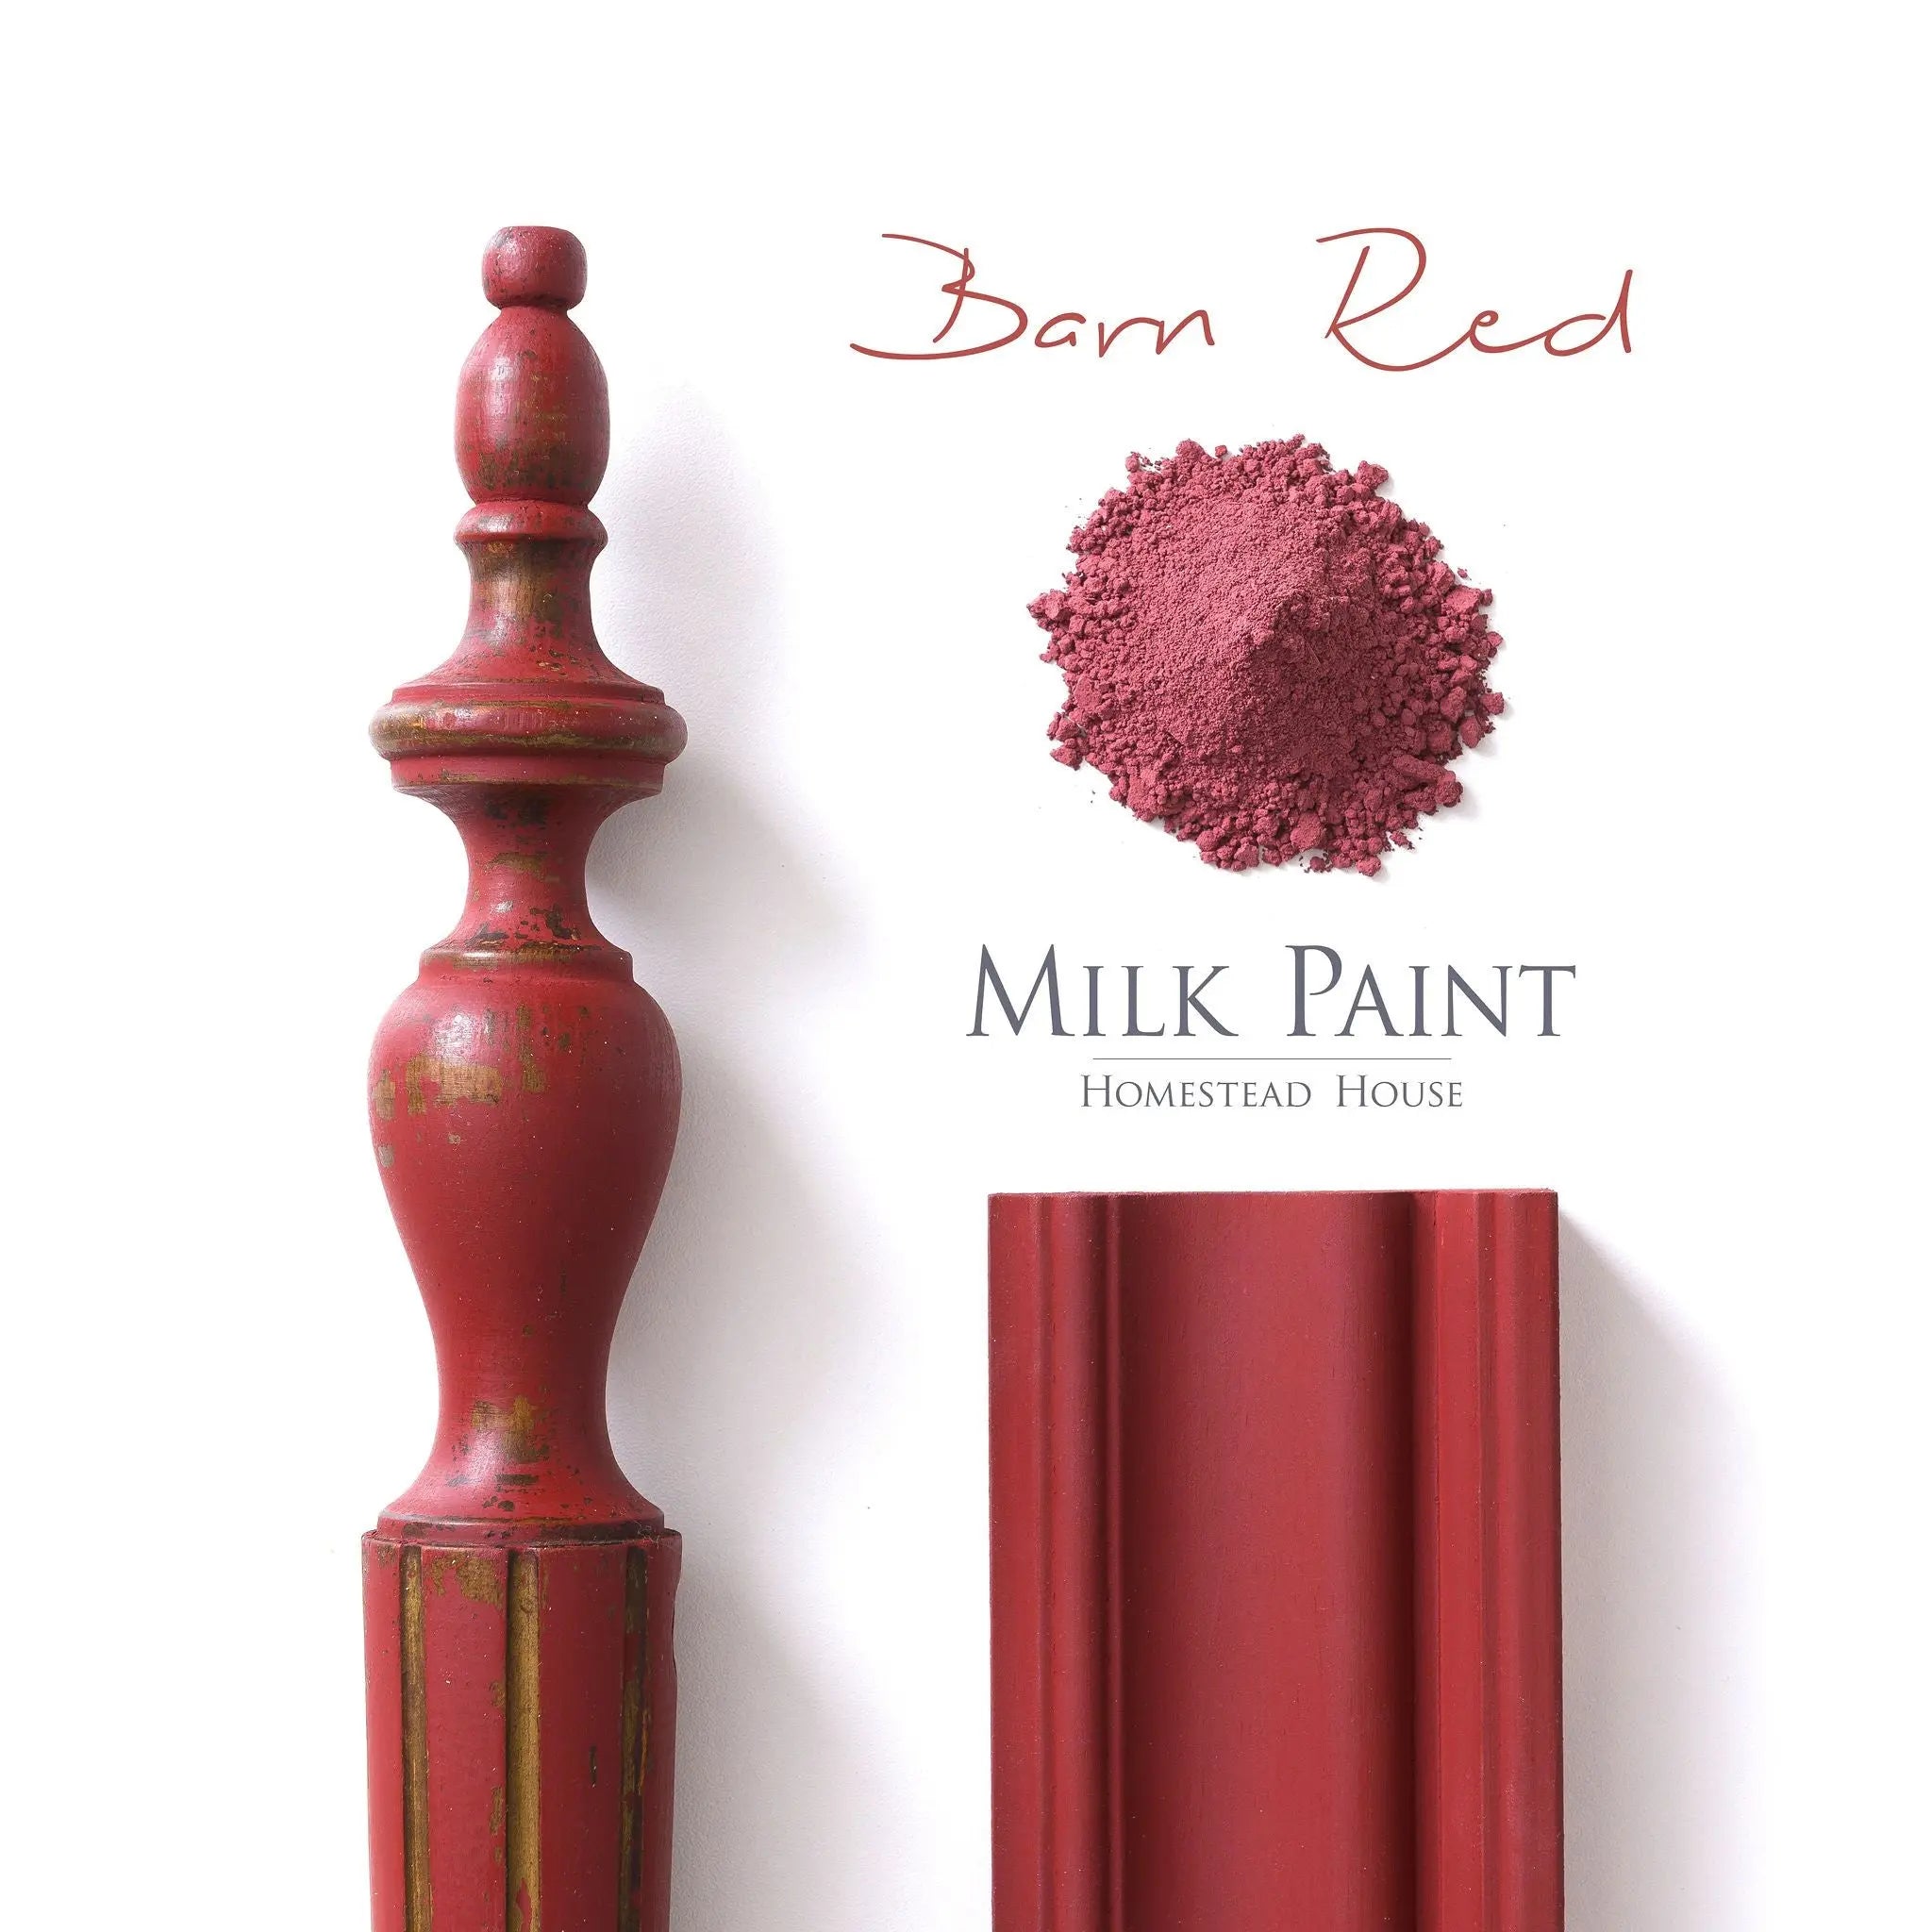 Homestead House Milk Paint - Barn Red - Home Smith